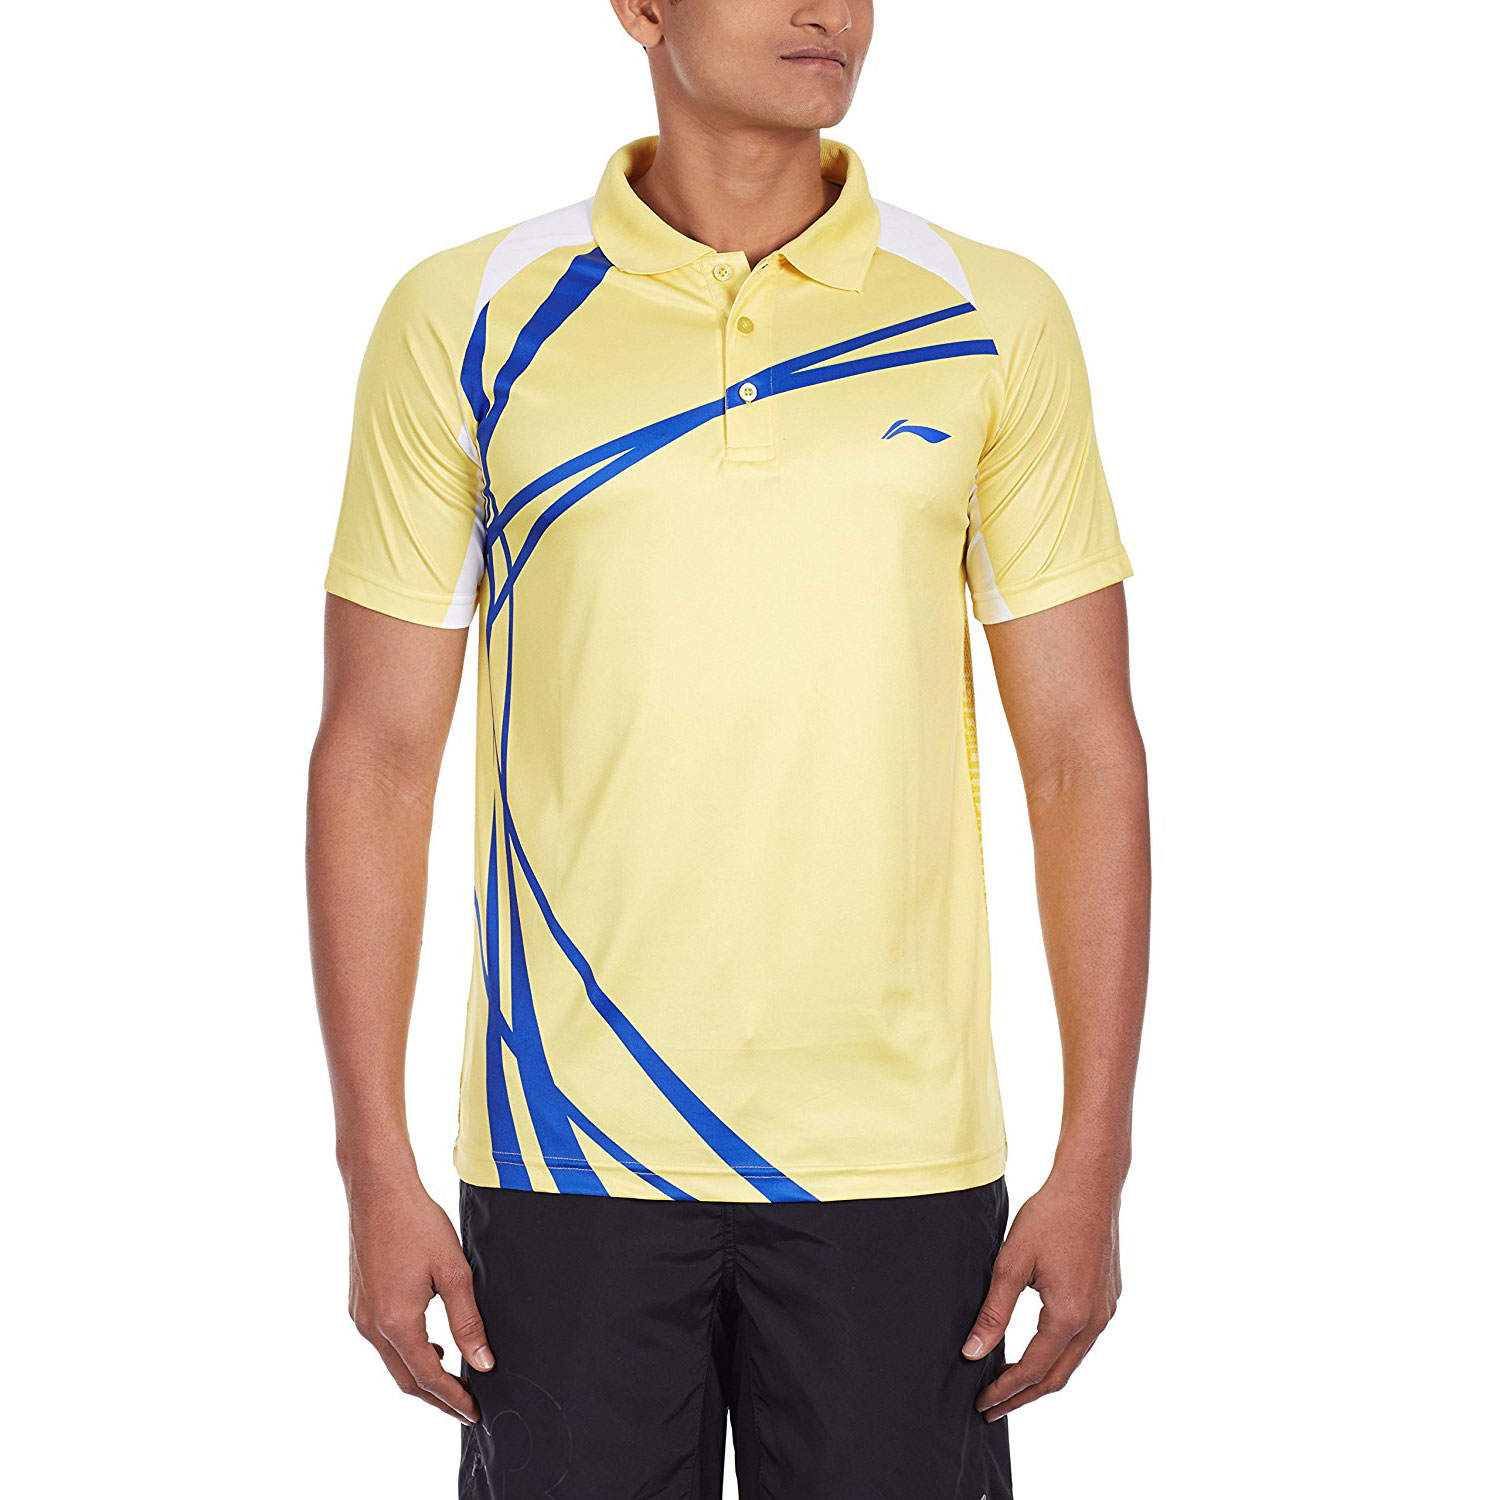  Li-Ning ALPH423-3 Collar Badminton T-Shirt, Men's (Yellow) 